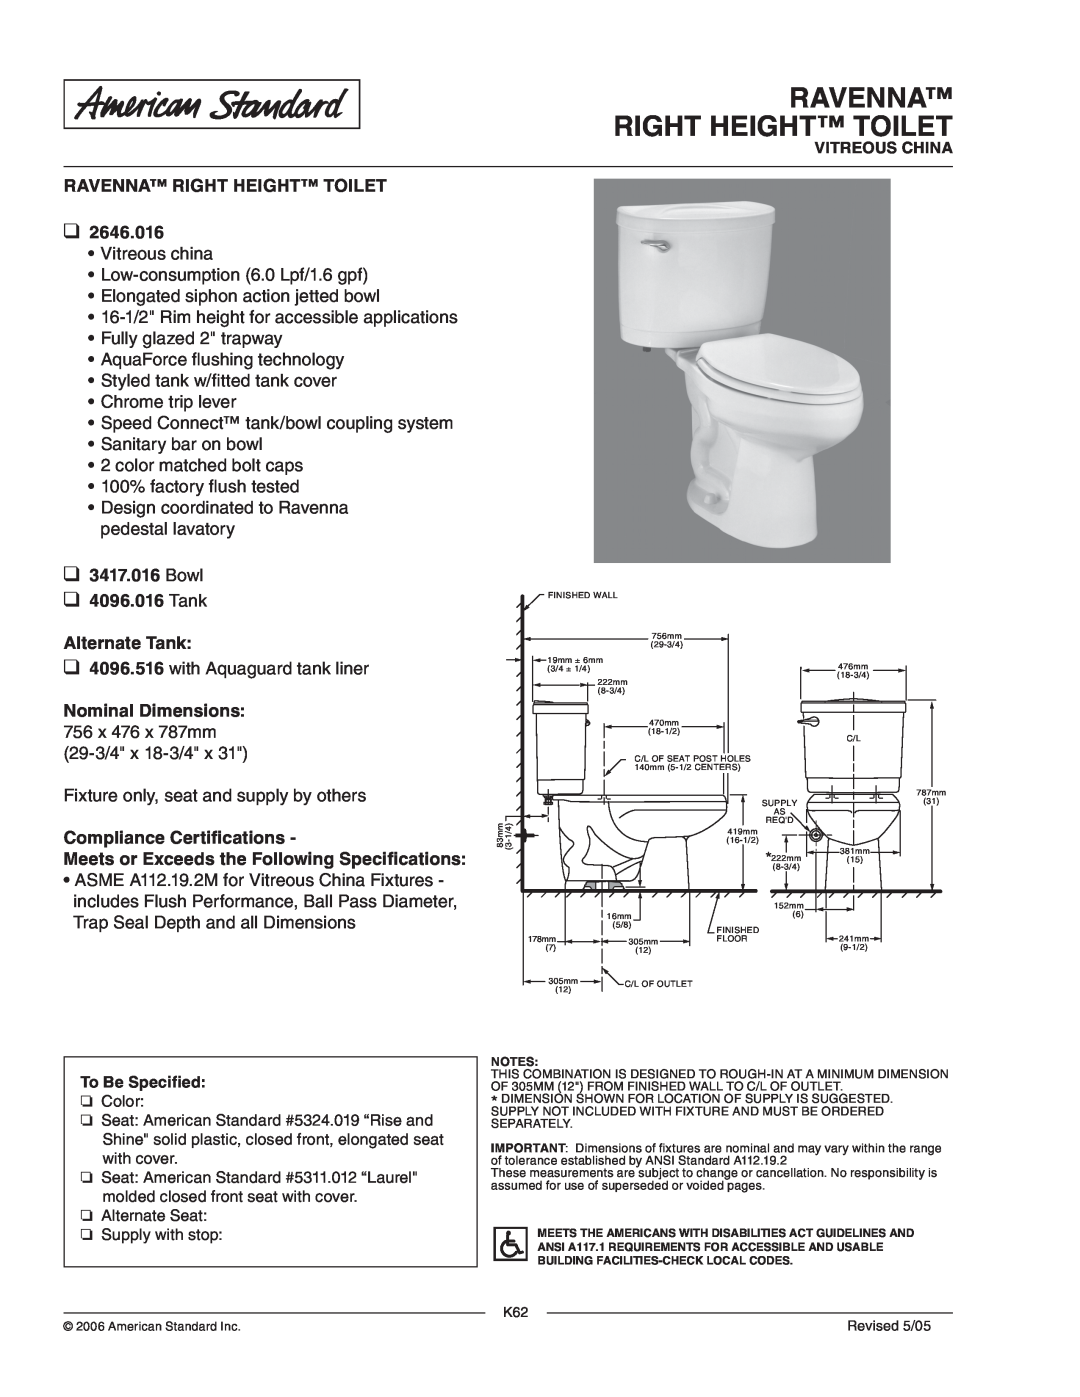 American Standard dimensions Ravenna Right Height Toilet, Bowl 4096.016 Tank Alternate Tank, Nominal Dimensions 